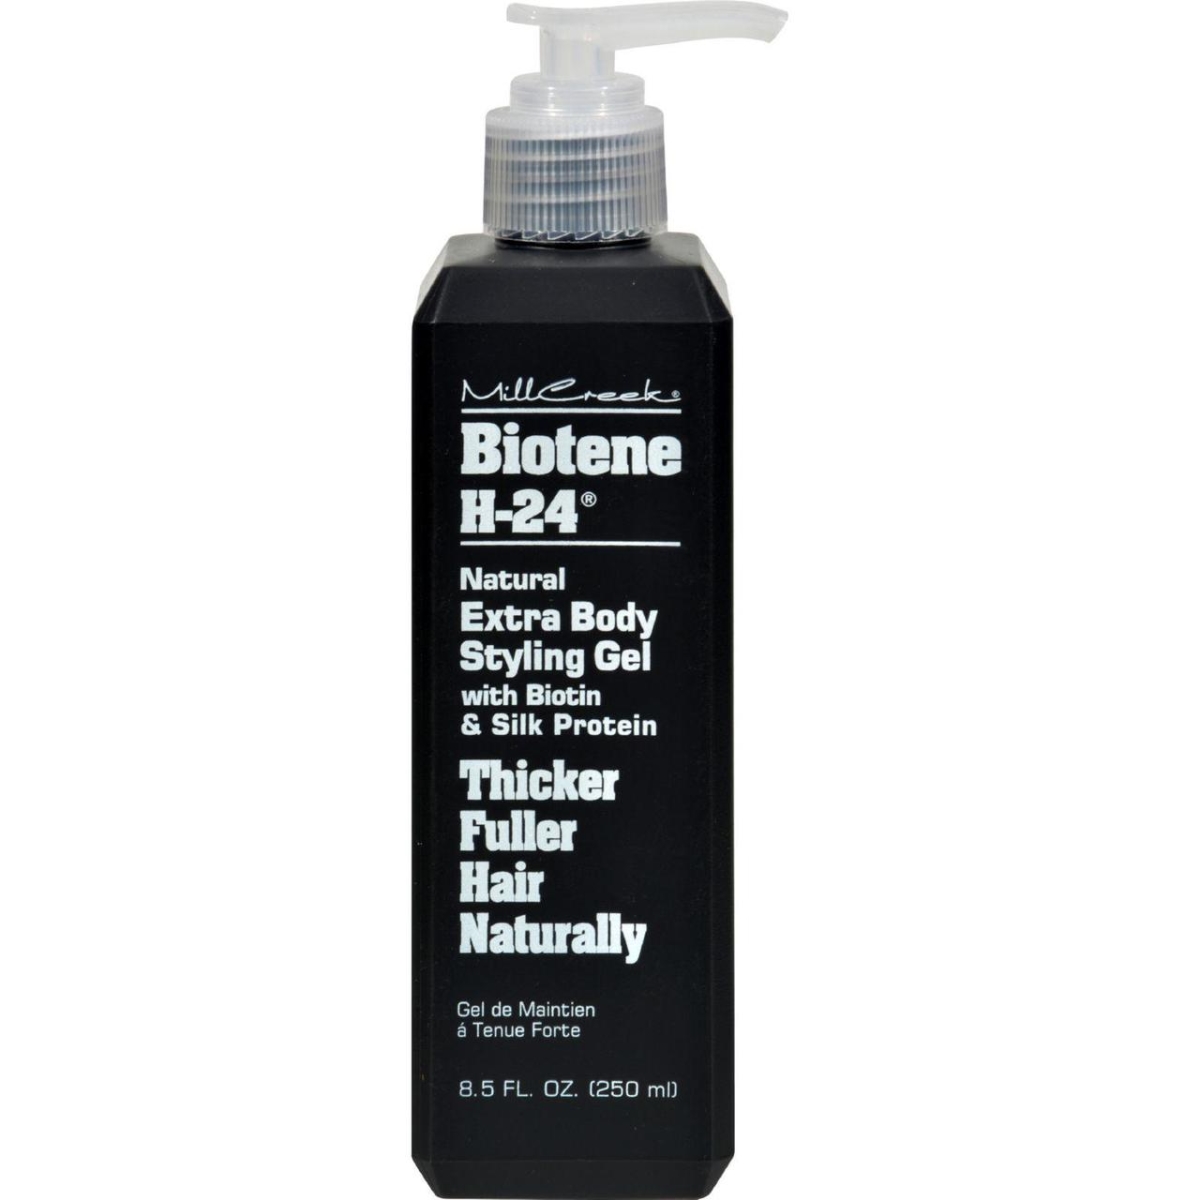 Hg0912907 8.5 Fl Oz Biotene H-24 Natural Extra Body Styling Gel